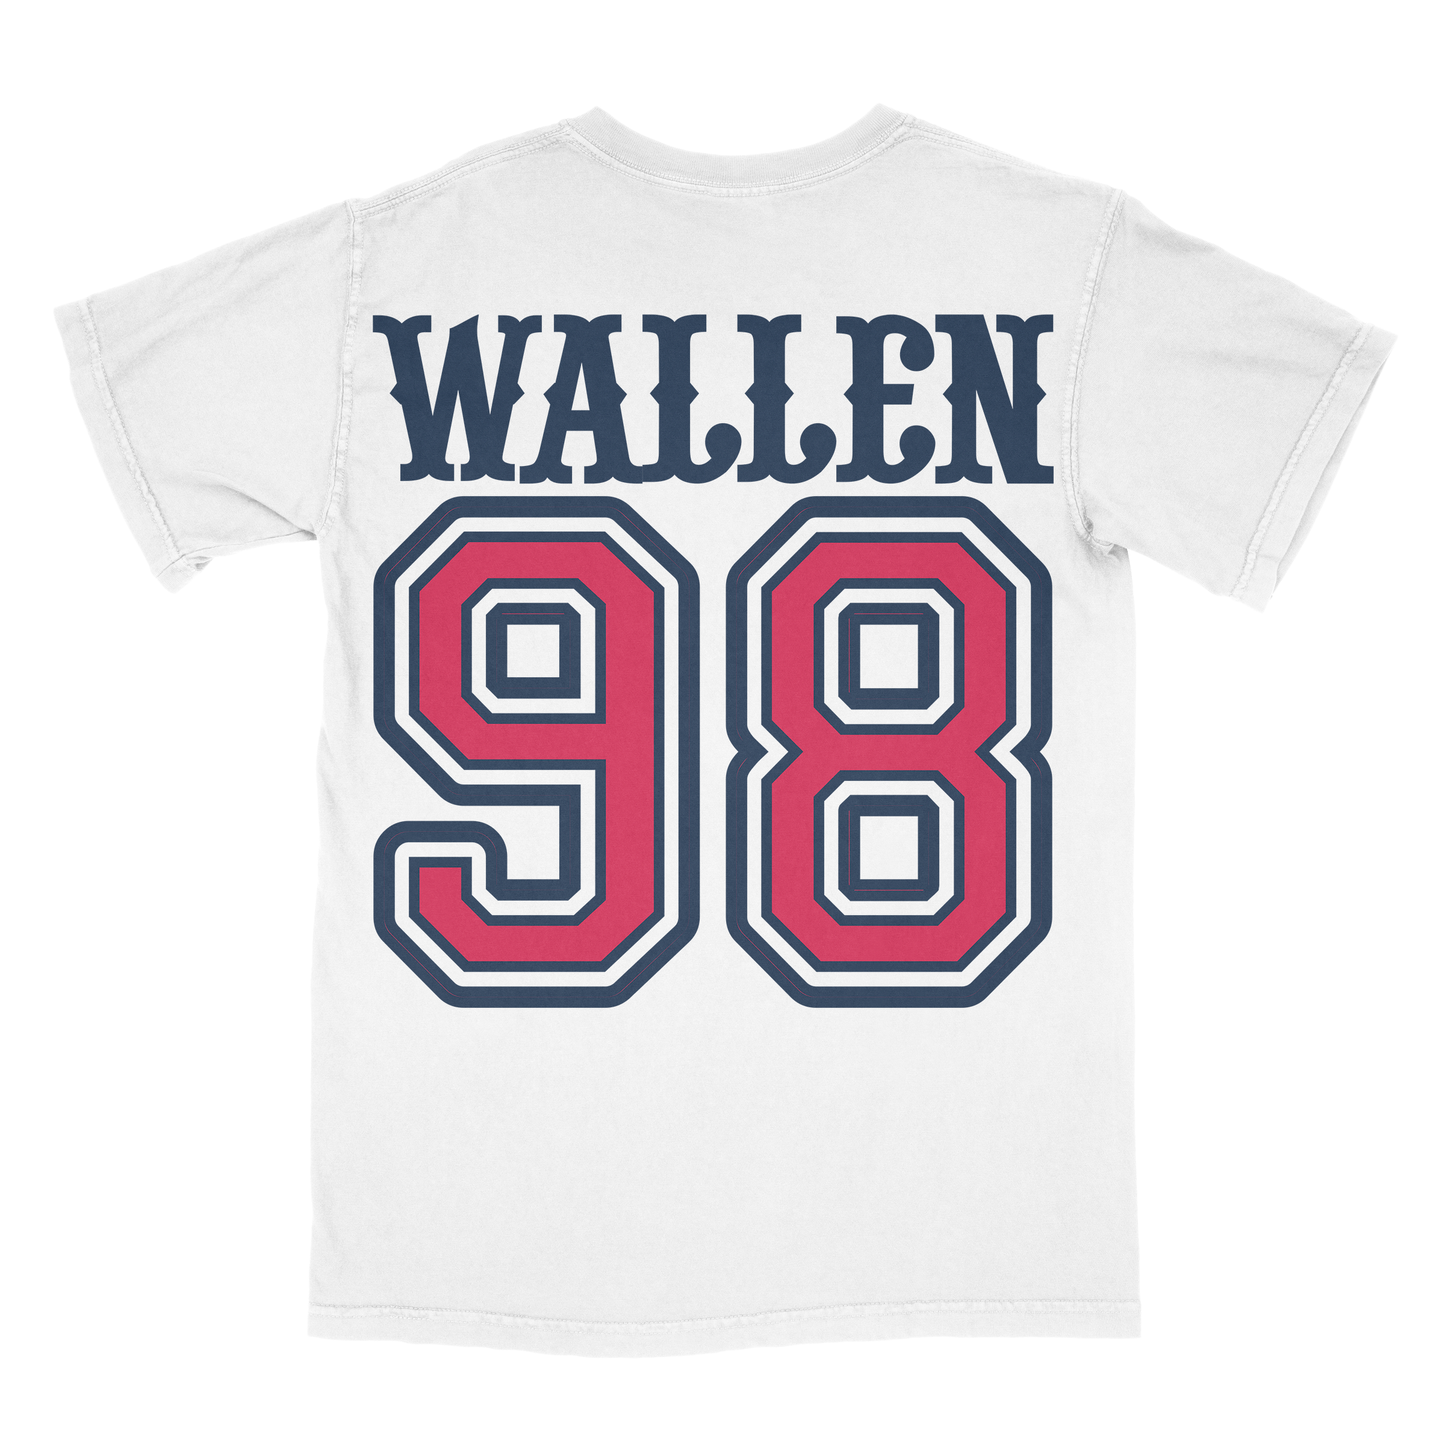 98' Braves T-Shirt